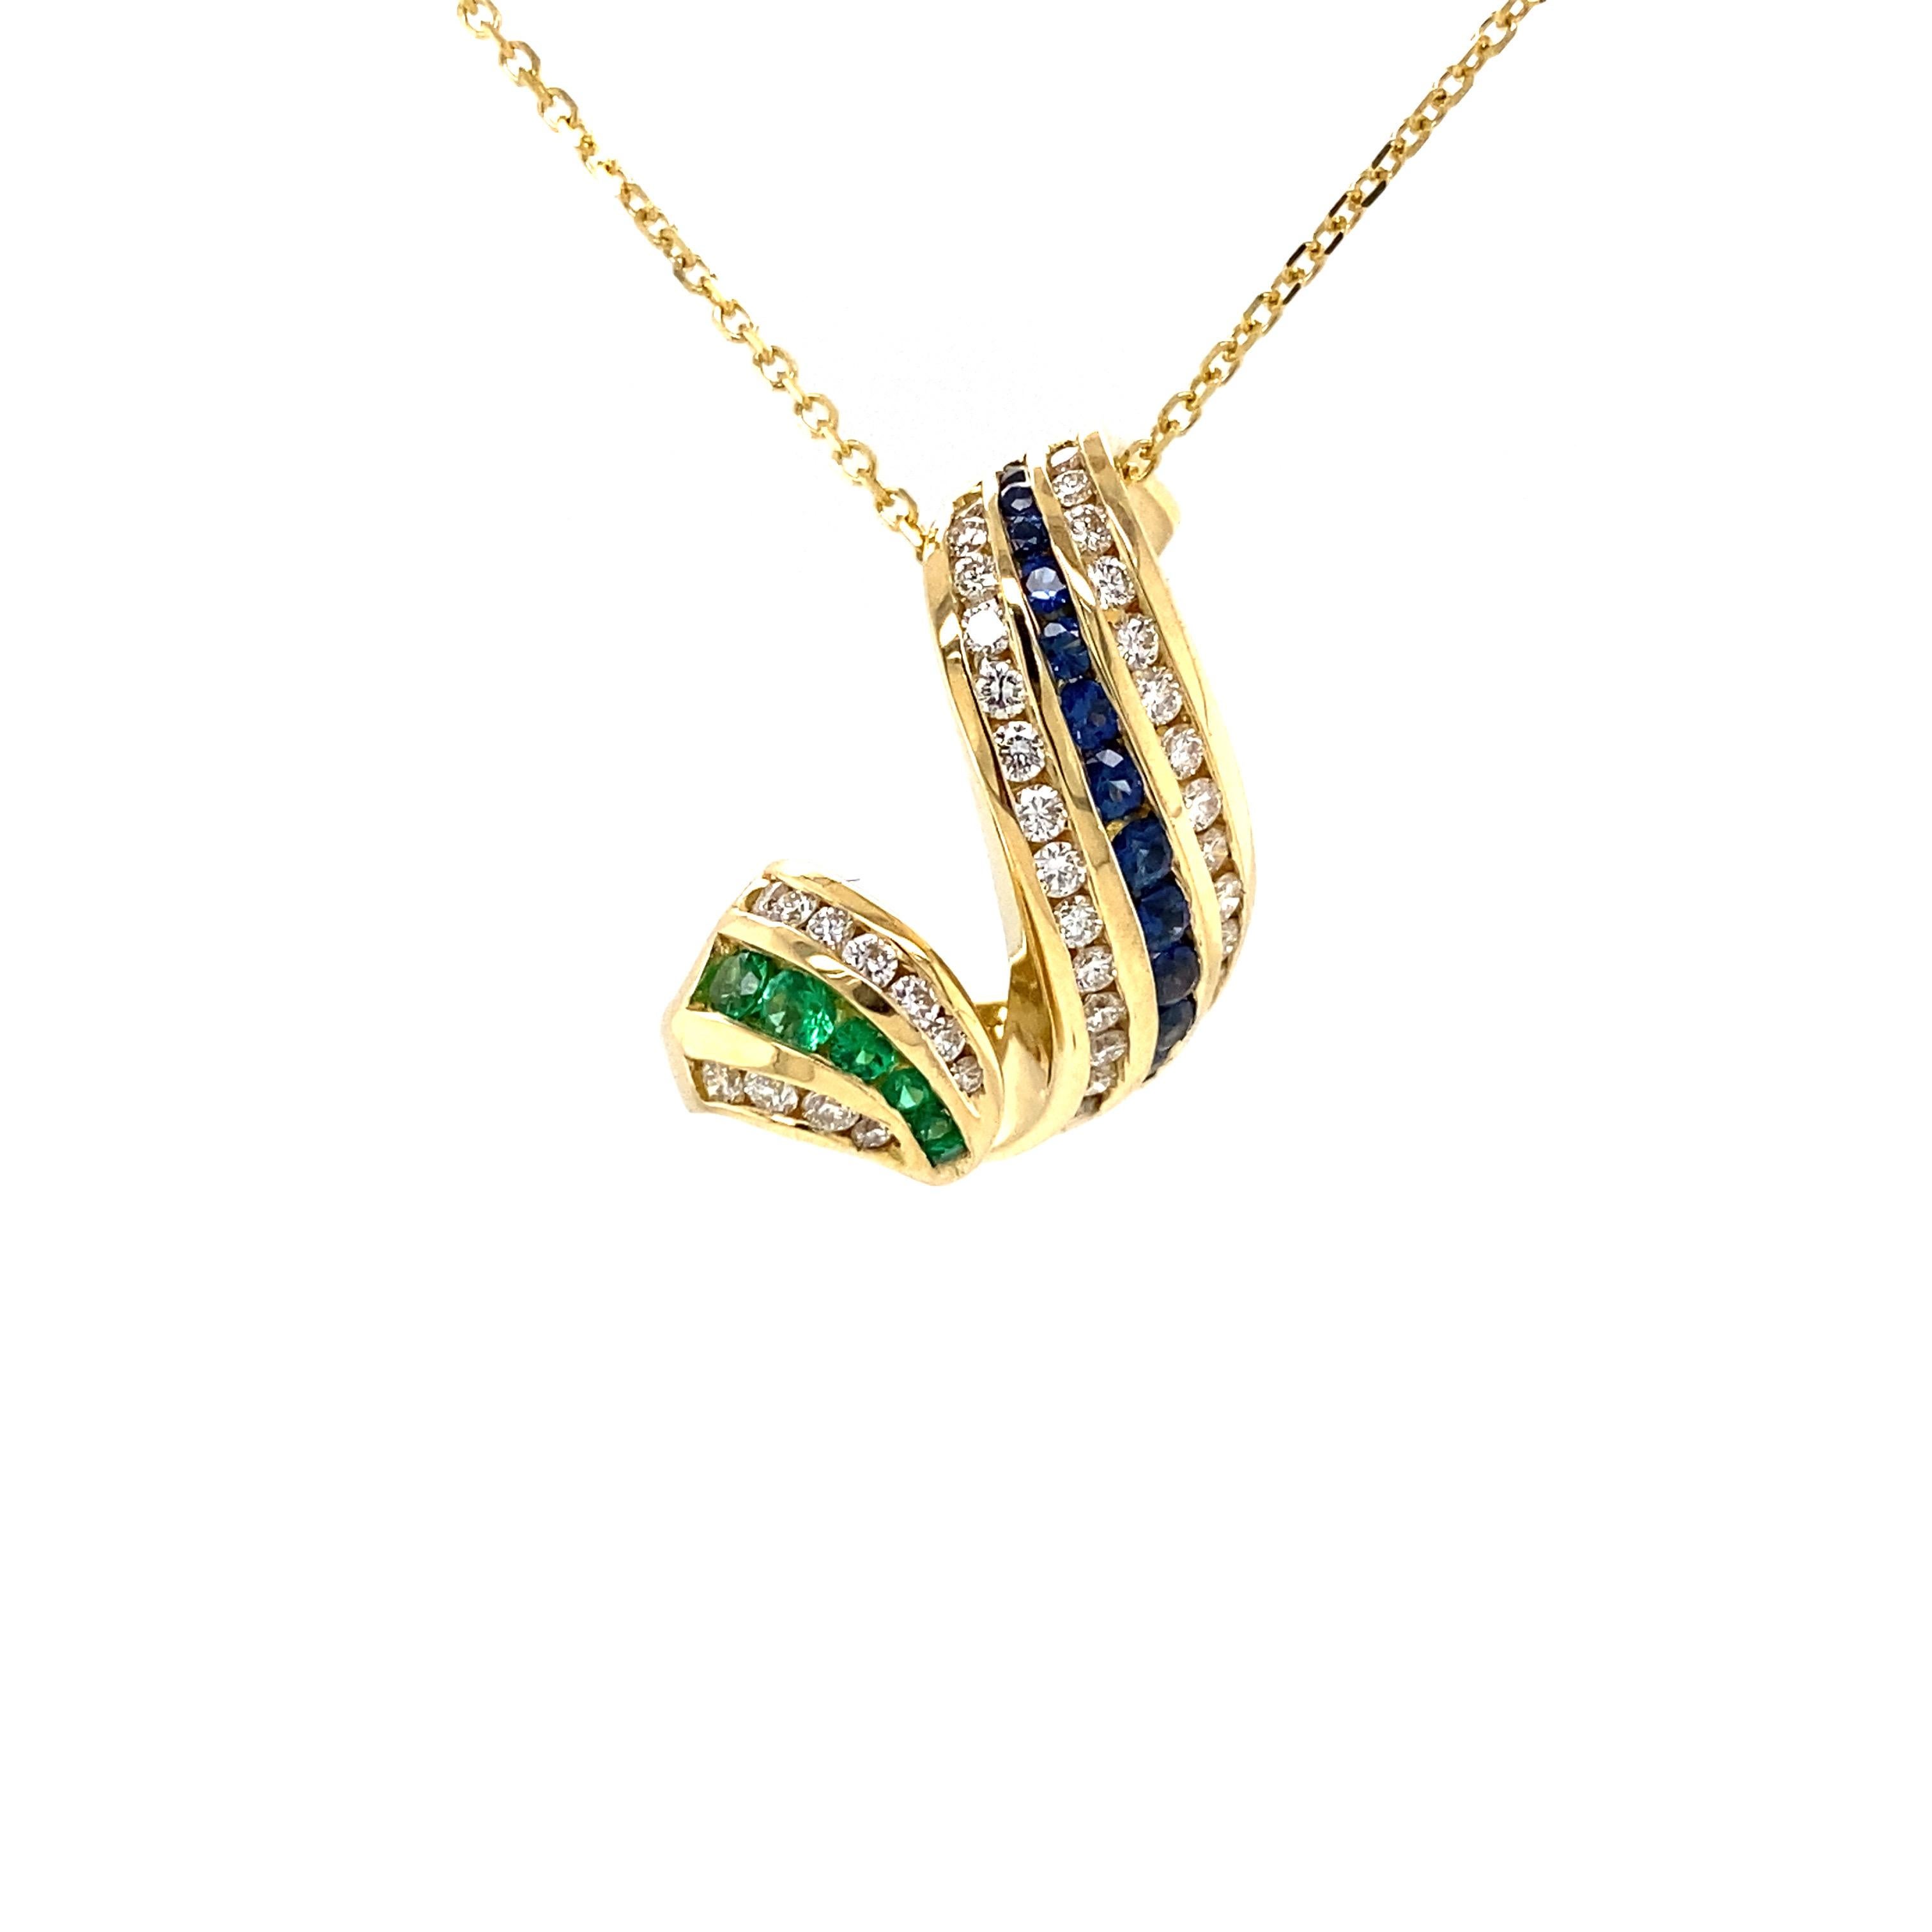 Charles Krypell Diamond Emerald Sapphire Swirl Pendant in 18K Yellow Gold.  (6) Emerald Gemstones weighing 0.18 carat total weight, (14) Sapphires weighing 0.30 carat total weight and (45) Round Brilliant Cut Diamonds weighing 0.78 carat total